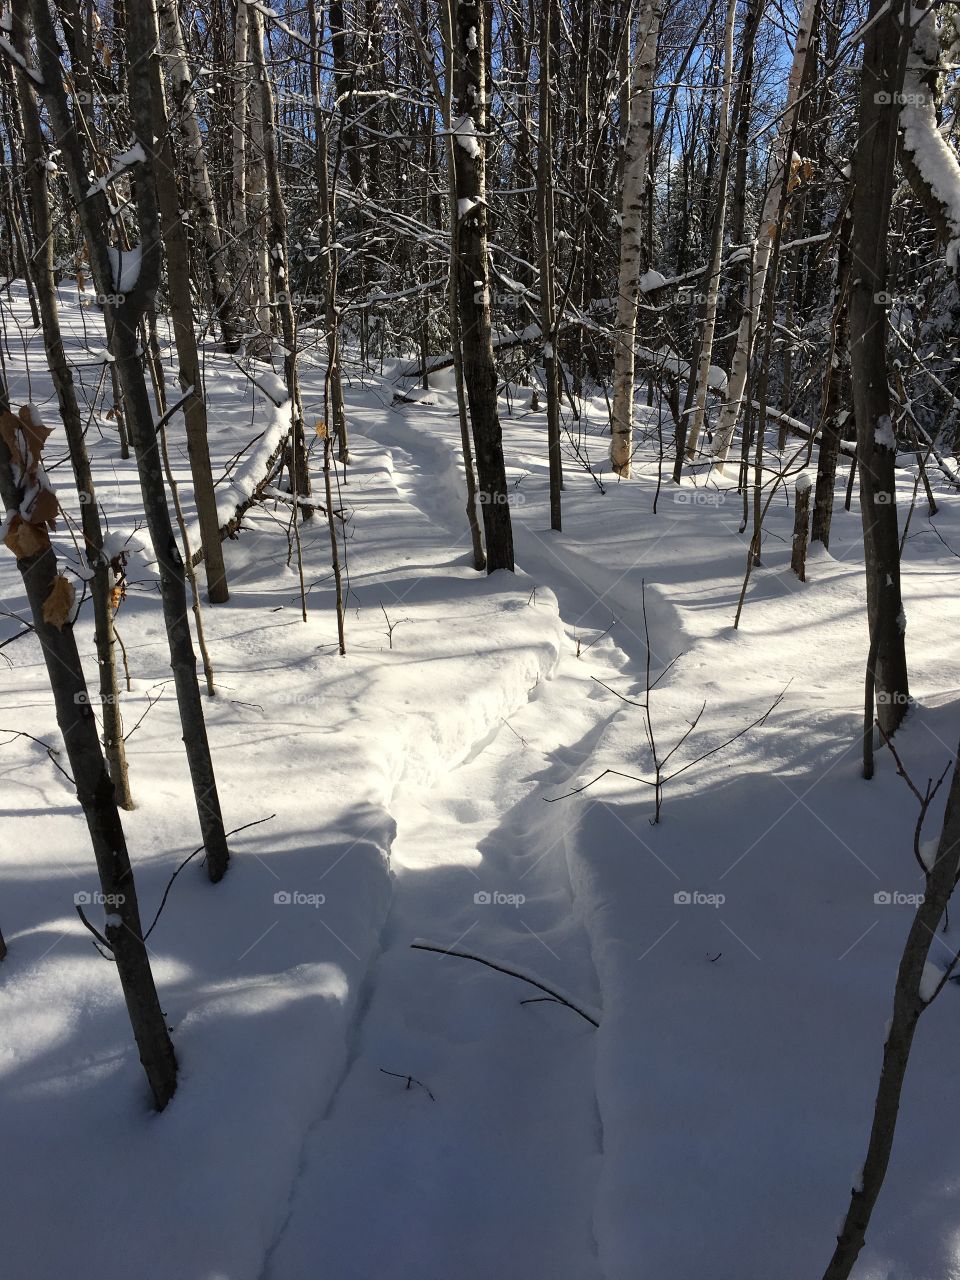 snowy snowshoe trail in my back yard